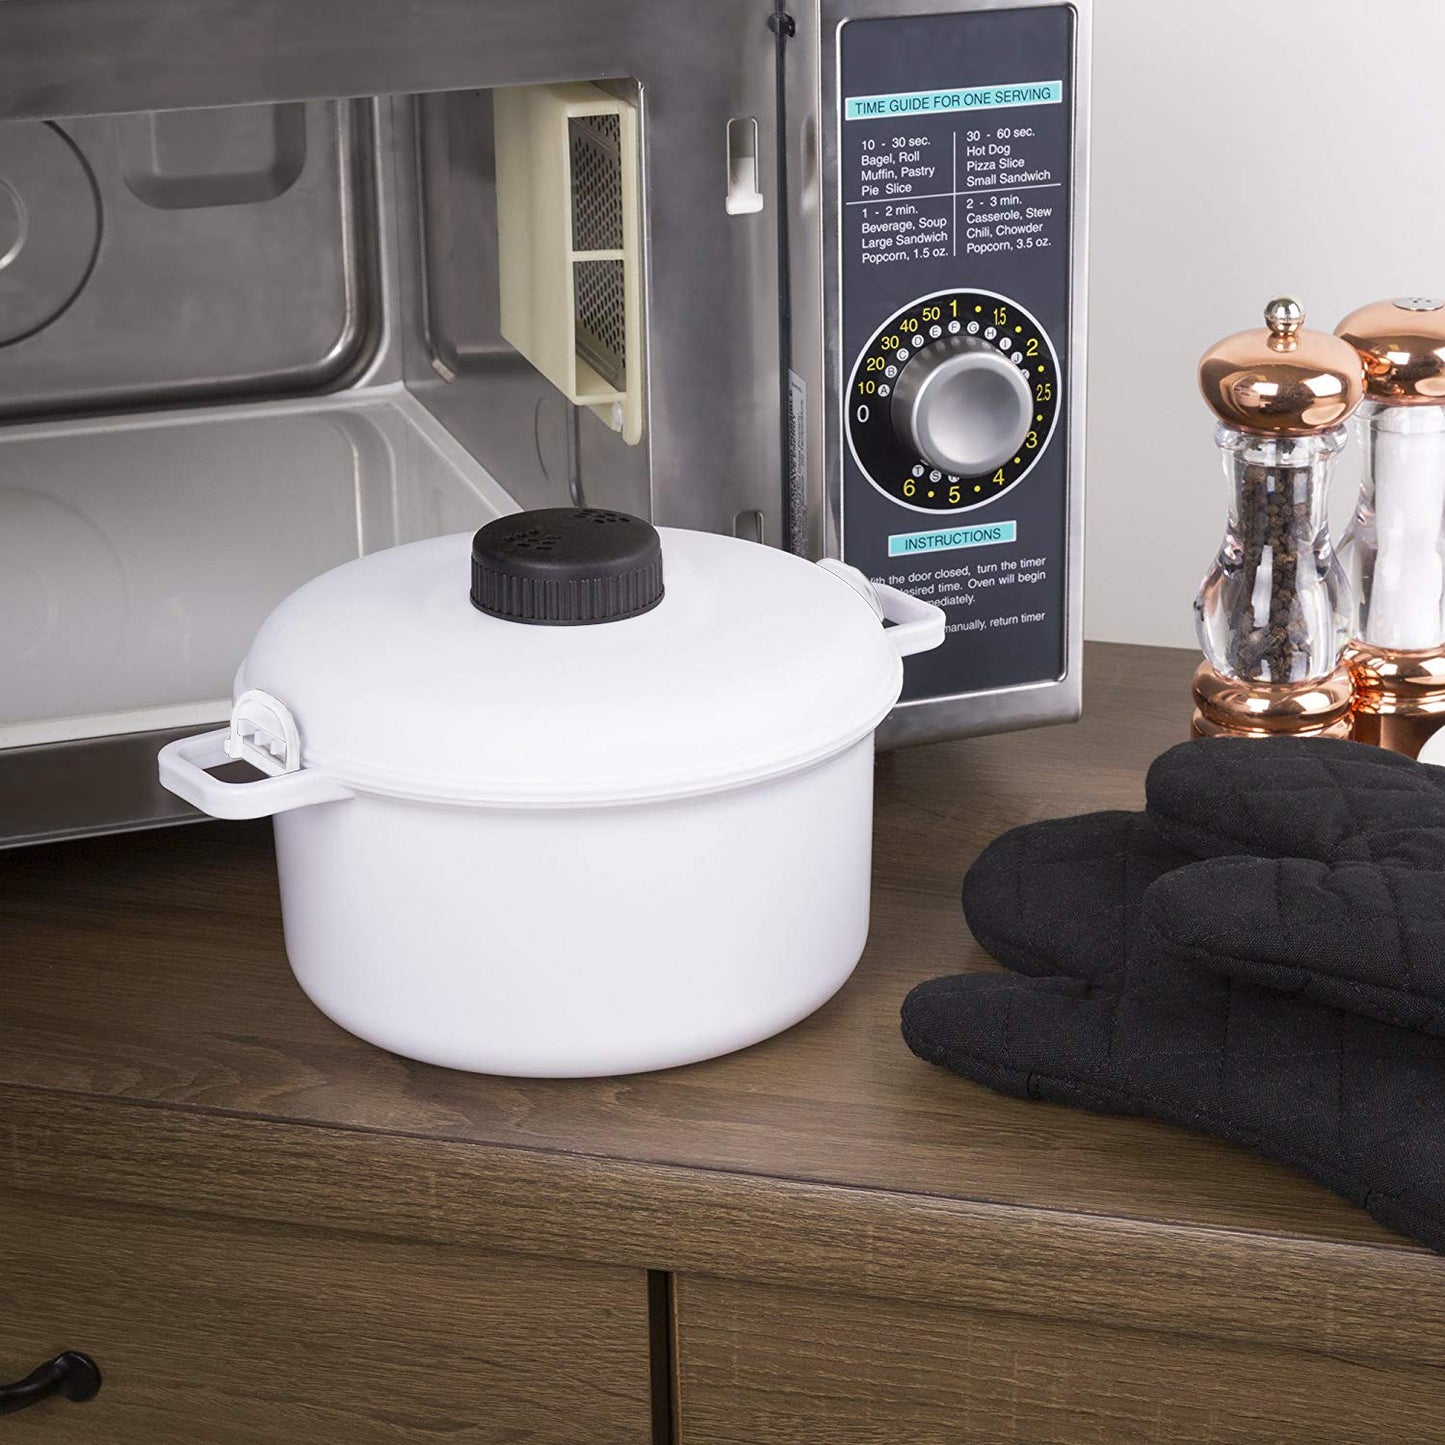 
                  
                    Bene Casa plastic microwave pressure cooker, easy clean, microwave safe
                  
                